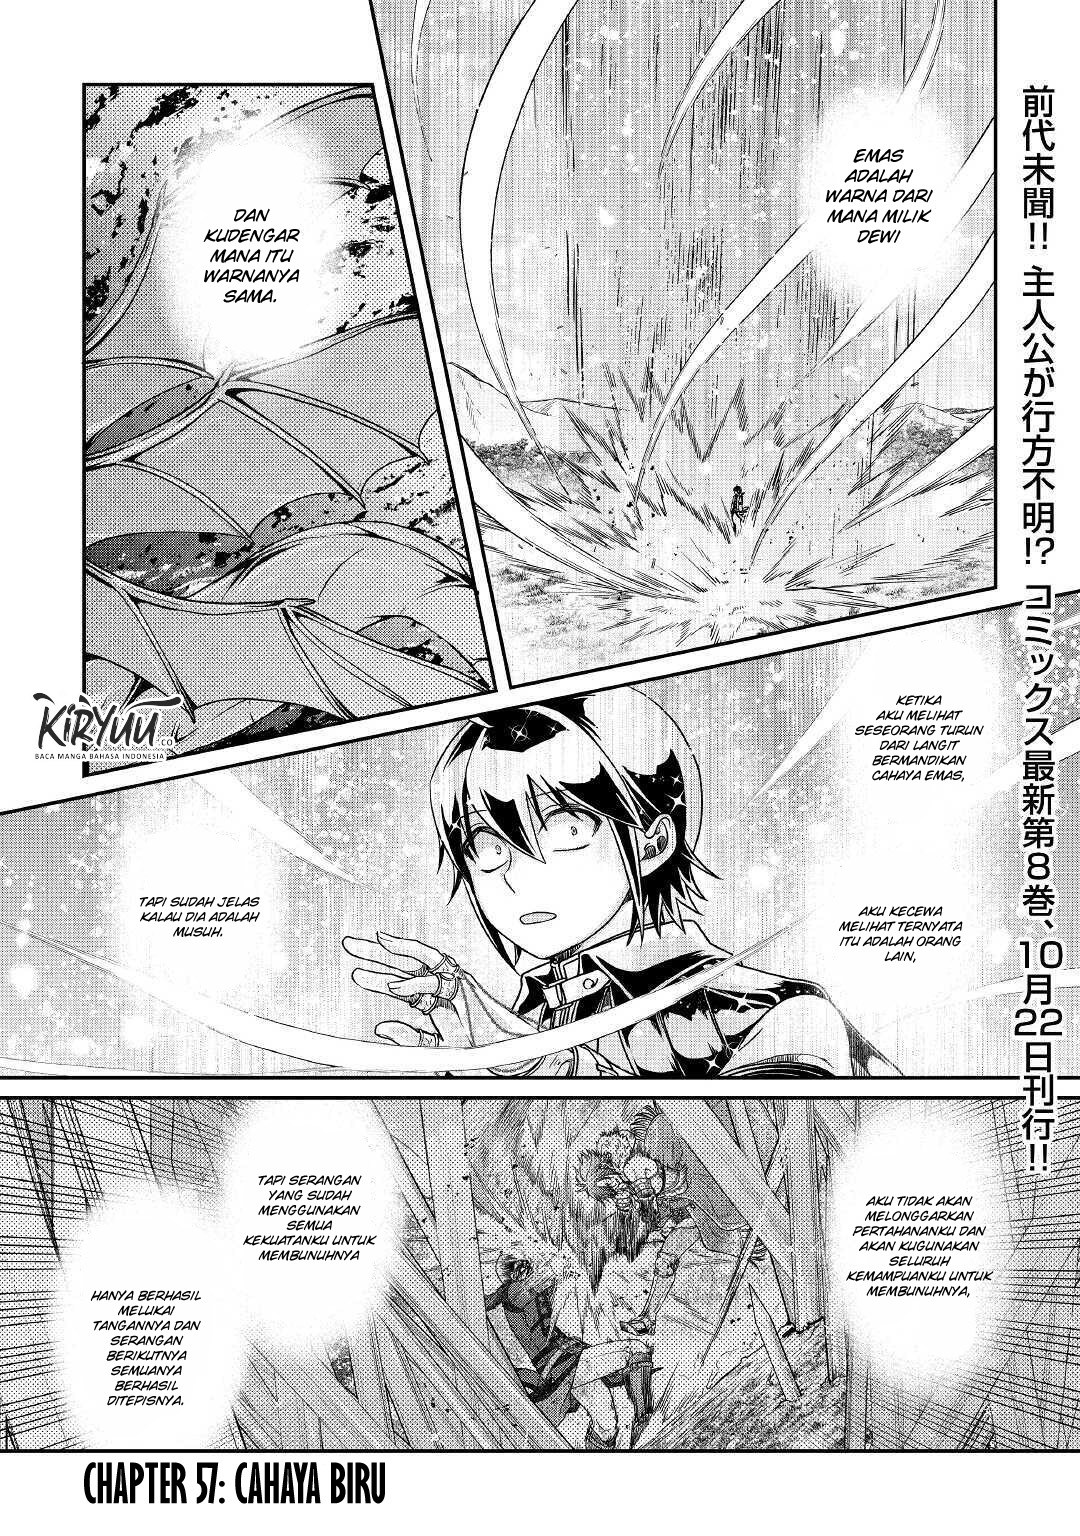 Manga boruto chapter 57 sub indonesia baca komik